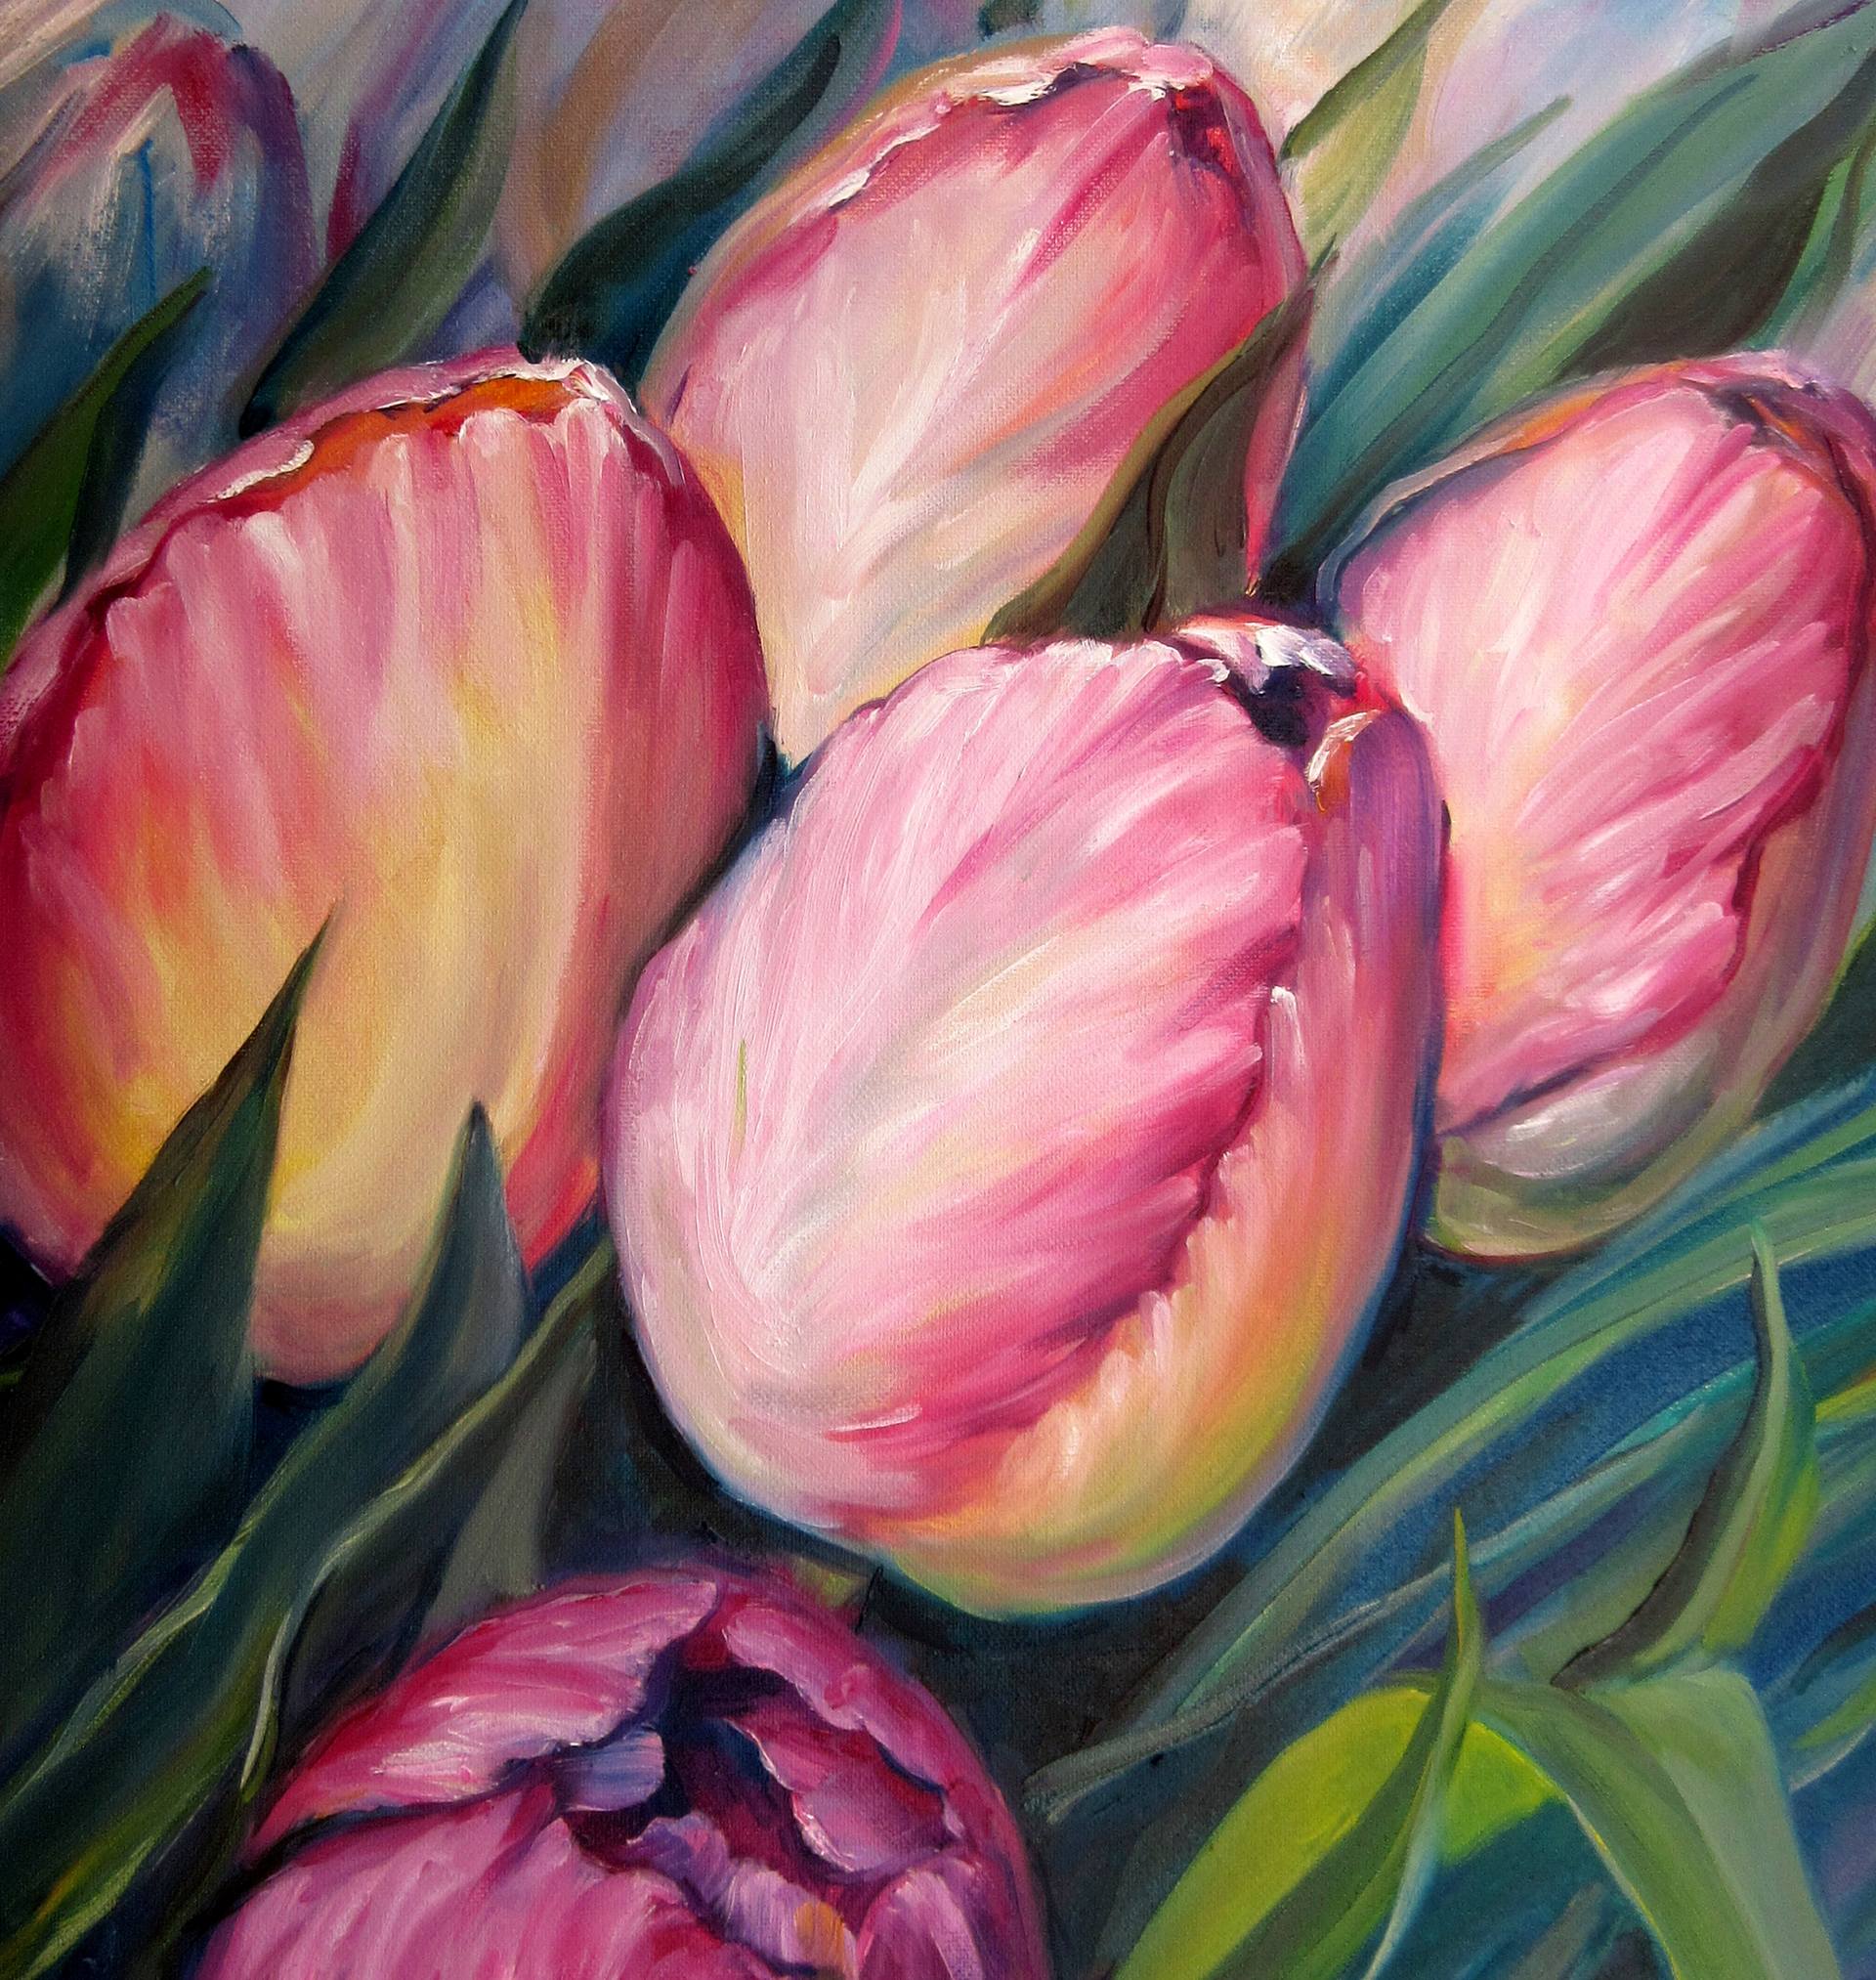 Saatchi Art: Pink Tulips Painting by Nadia Bykova